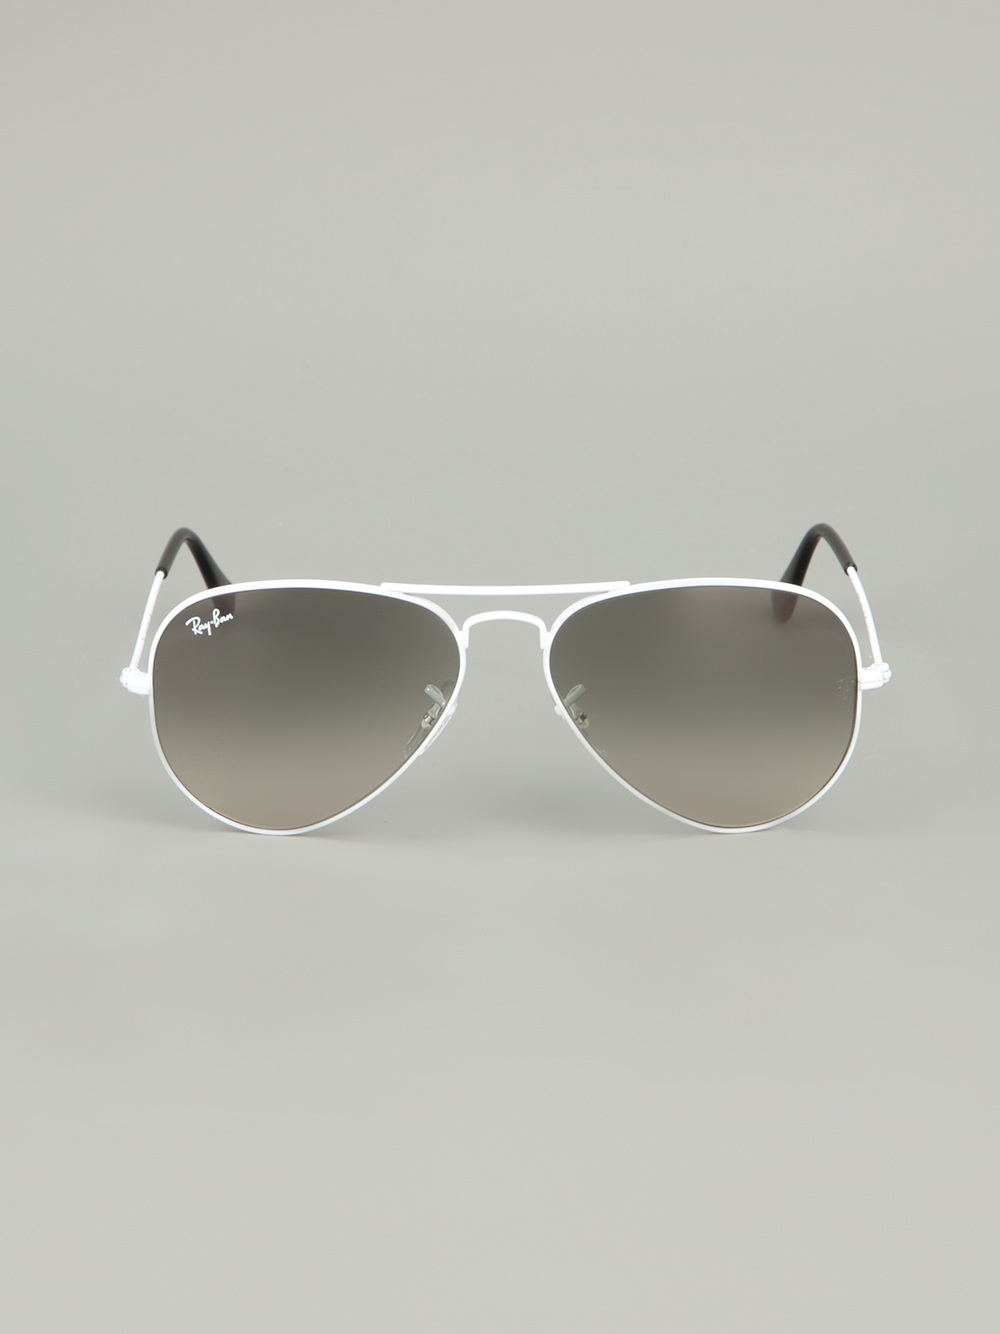 Ray-Ban Aviator Sunglasses in White | Lyst